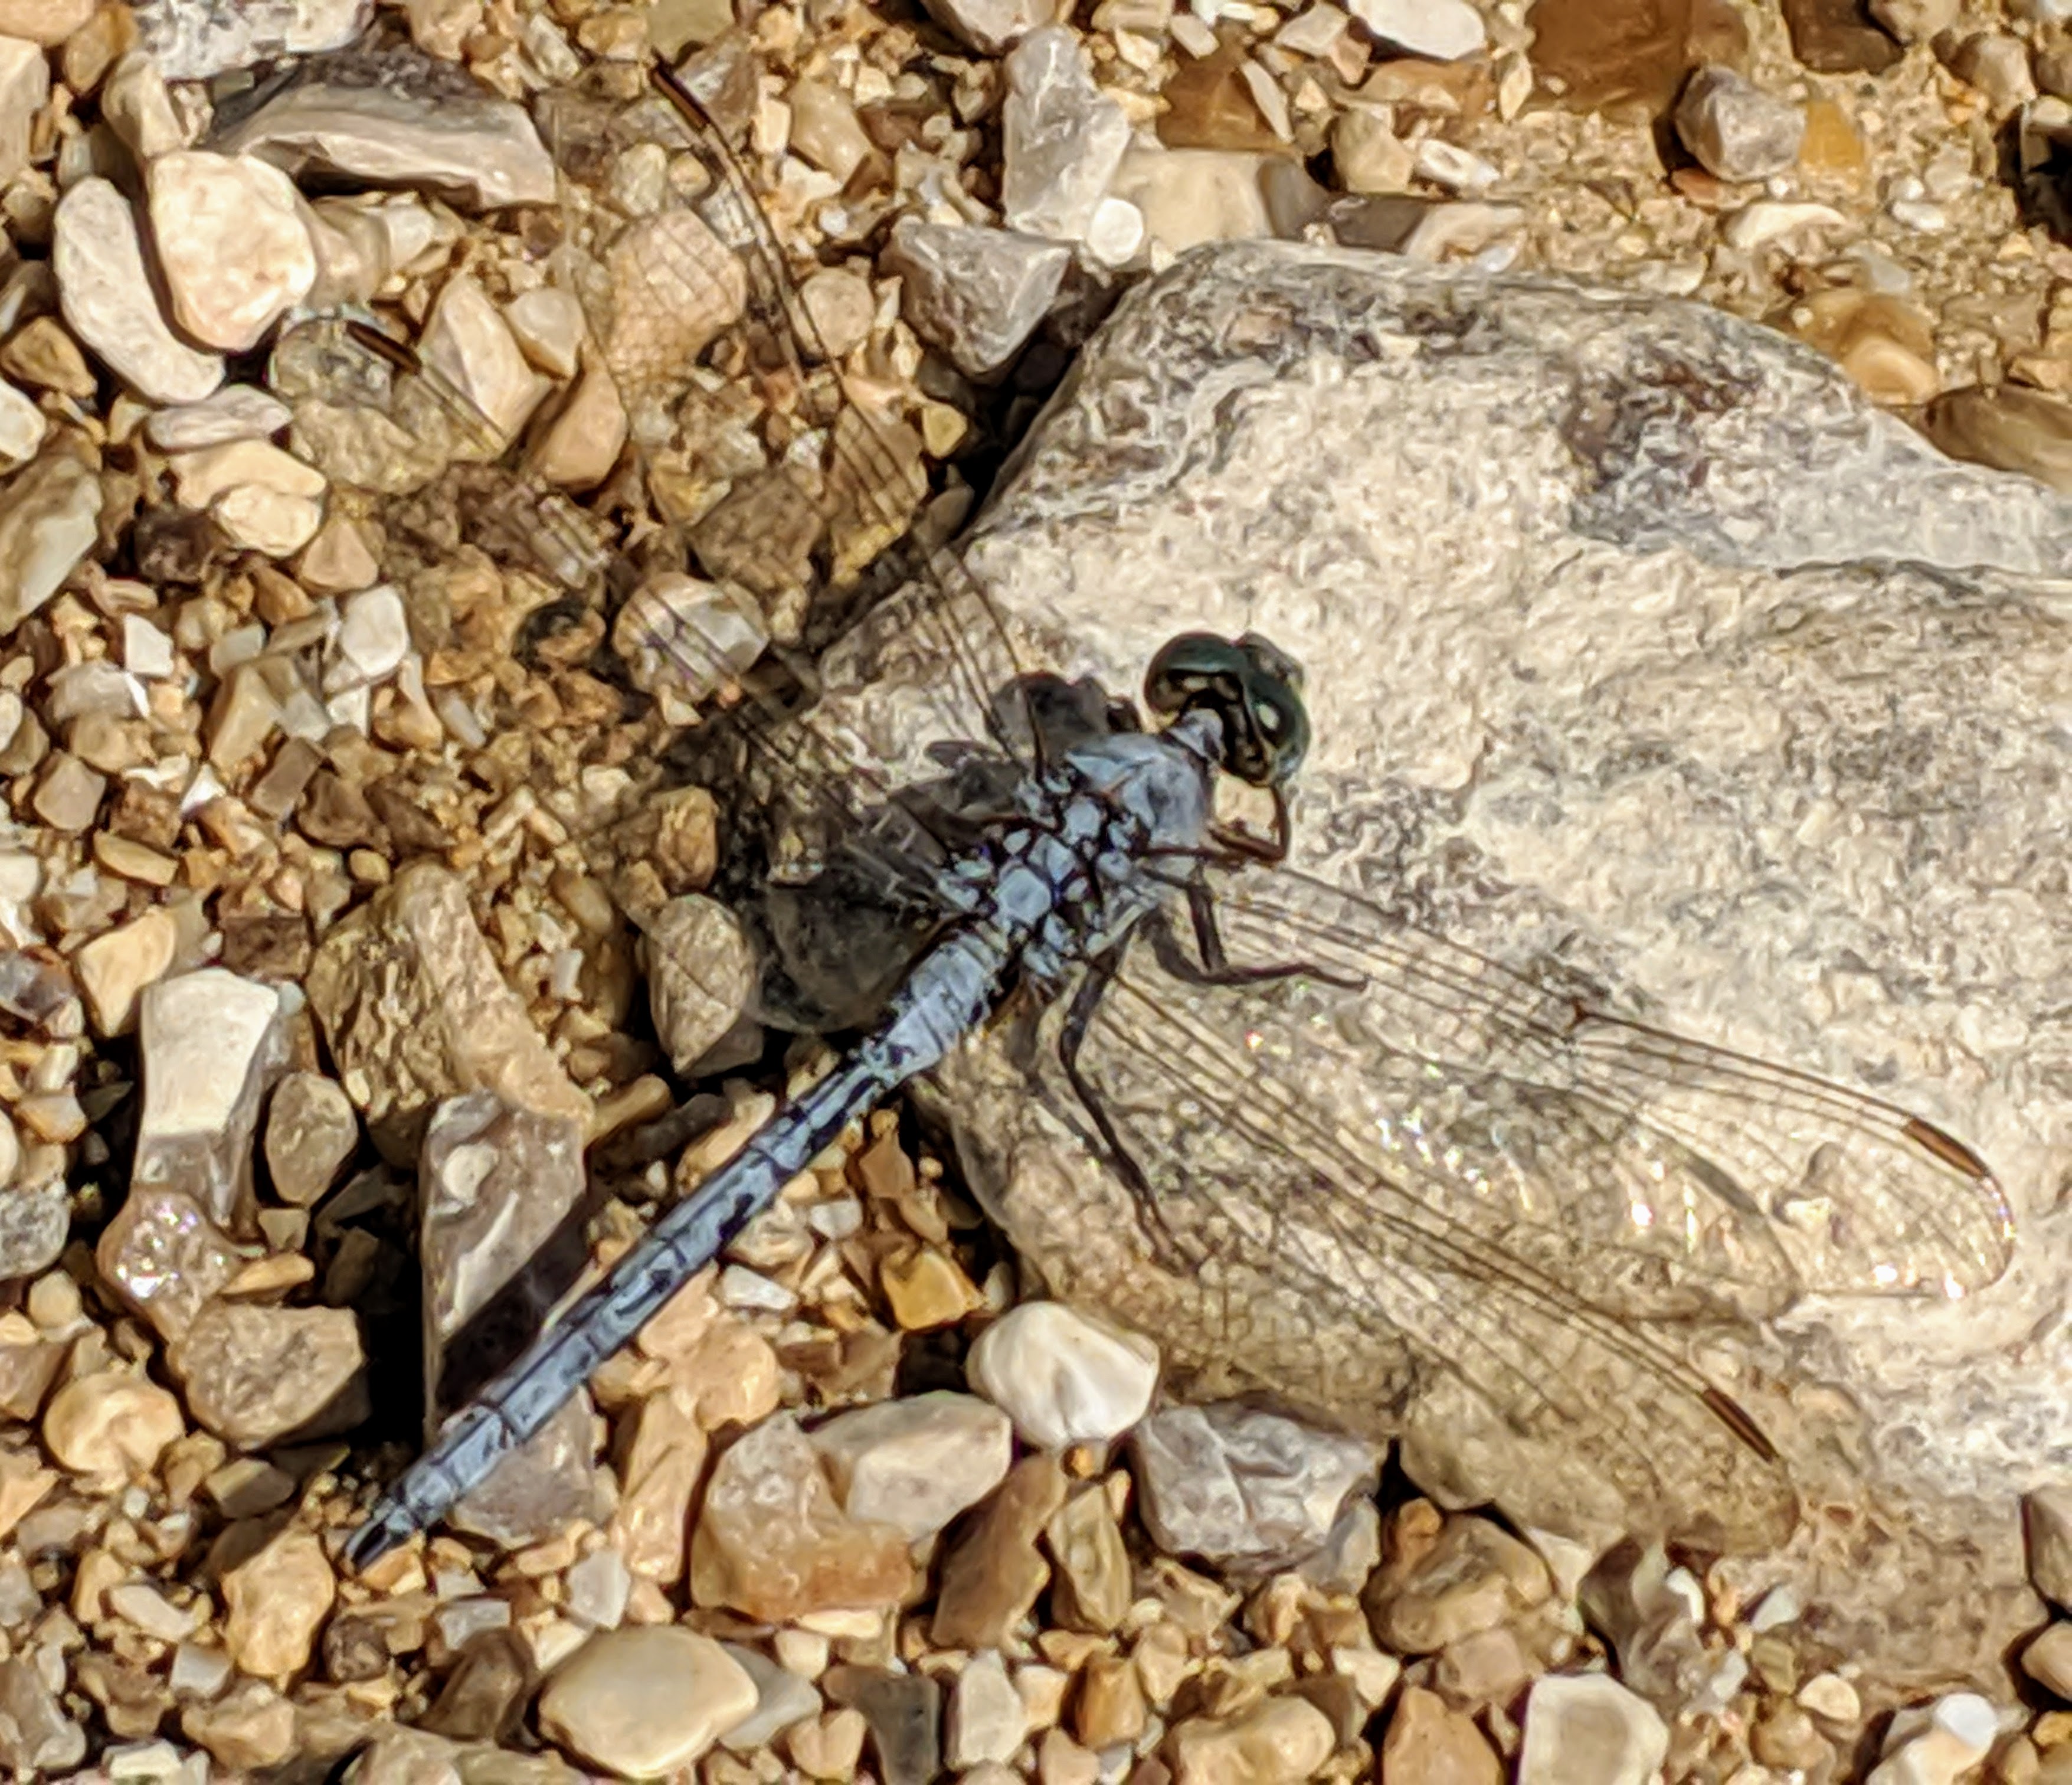 Blue dragonfly on rocks